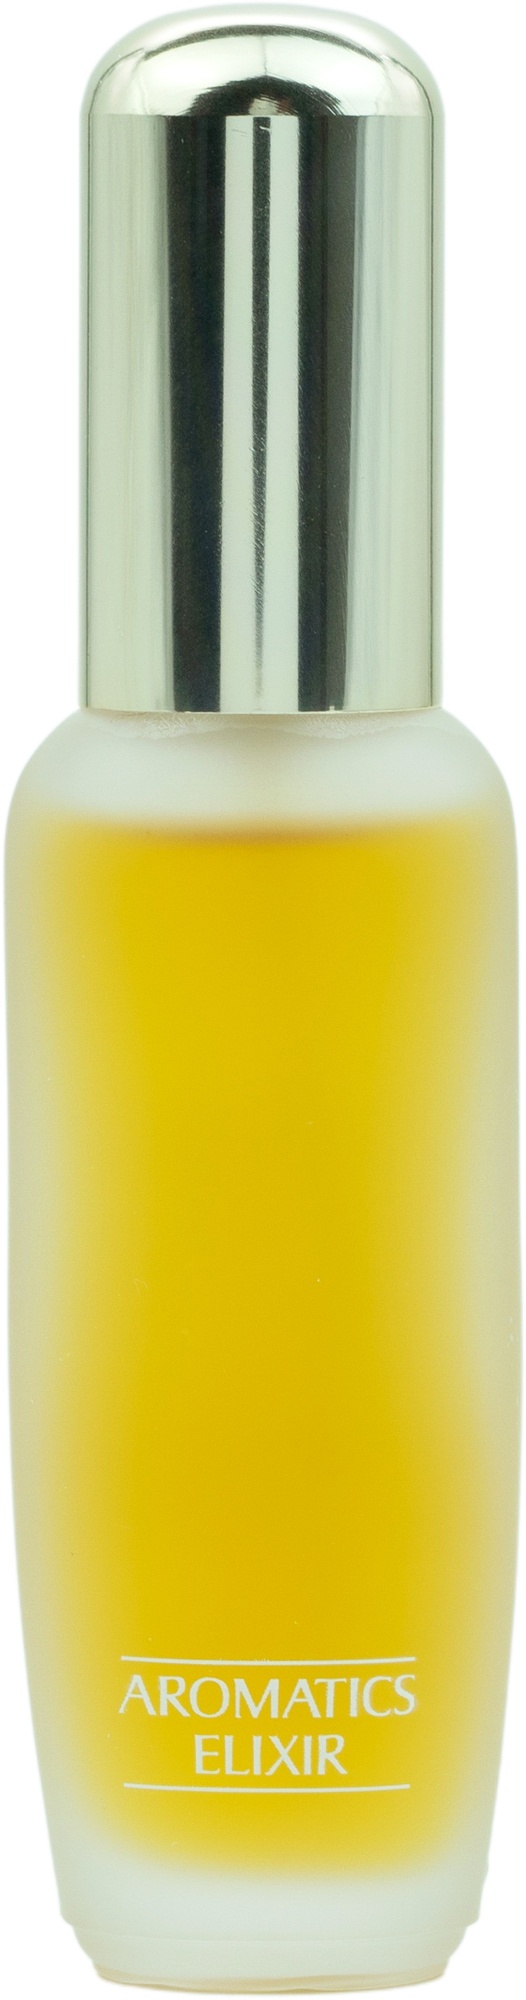 Bild Aromatics Elixir Eau de Parfum 45 ml